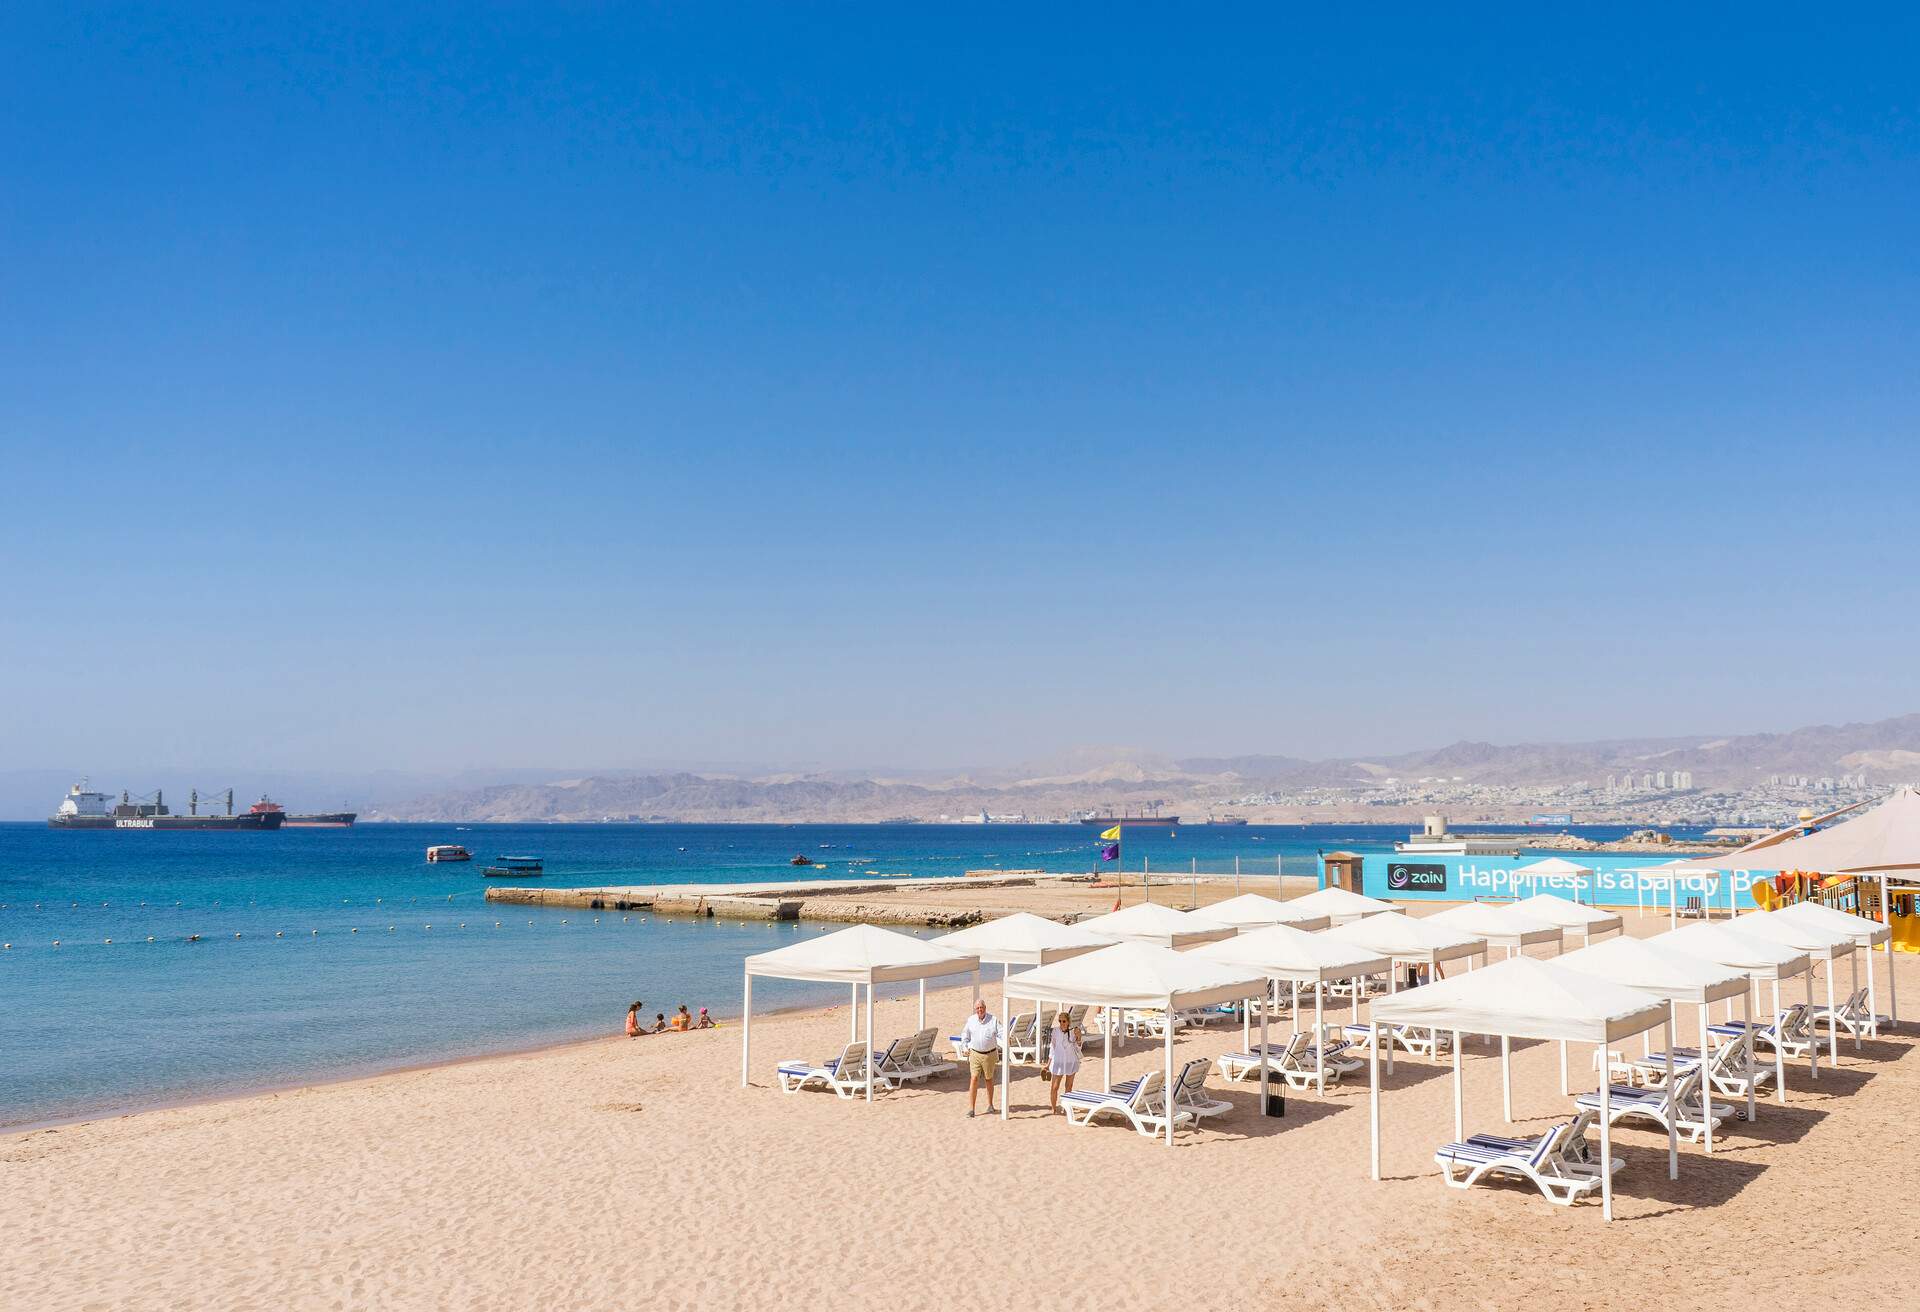 View of beach with cabanas of Gulf of Aqaba, Aqaba, Jordan